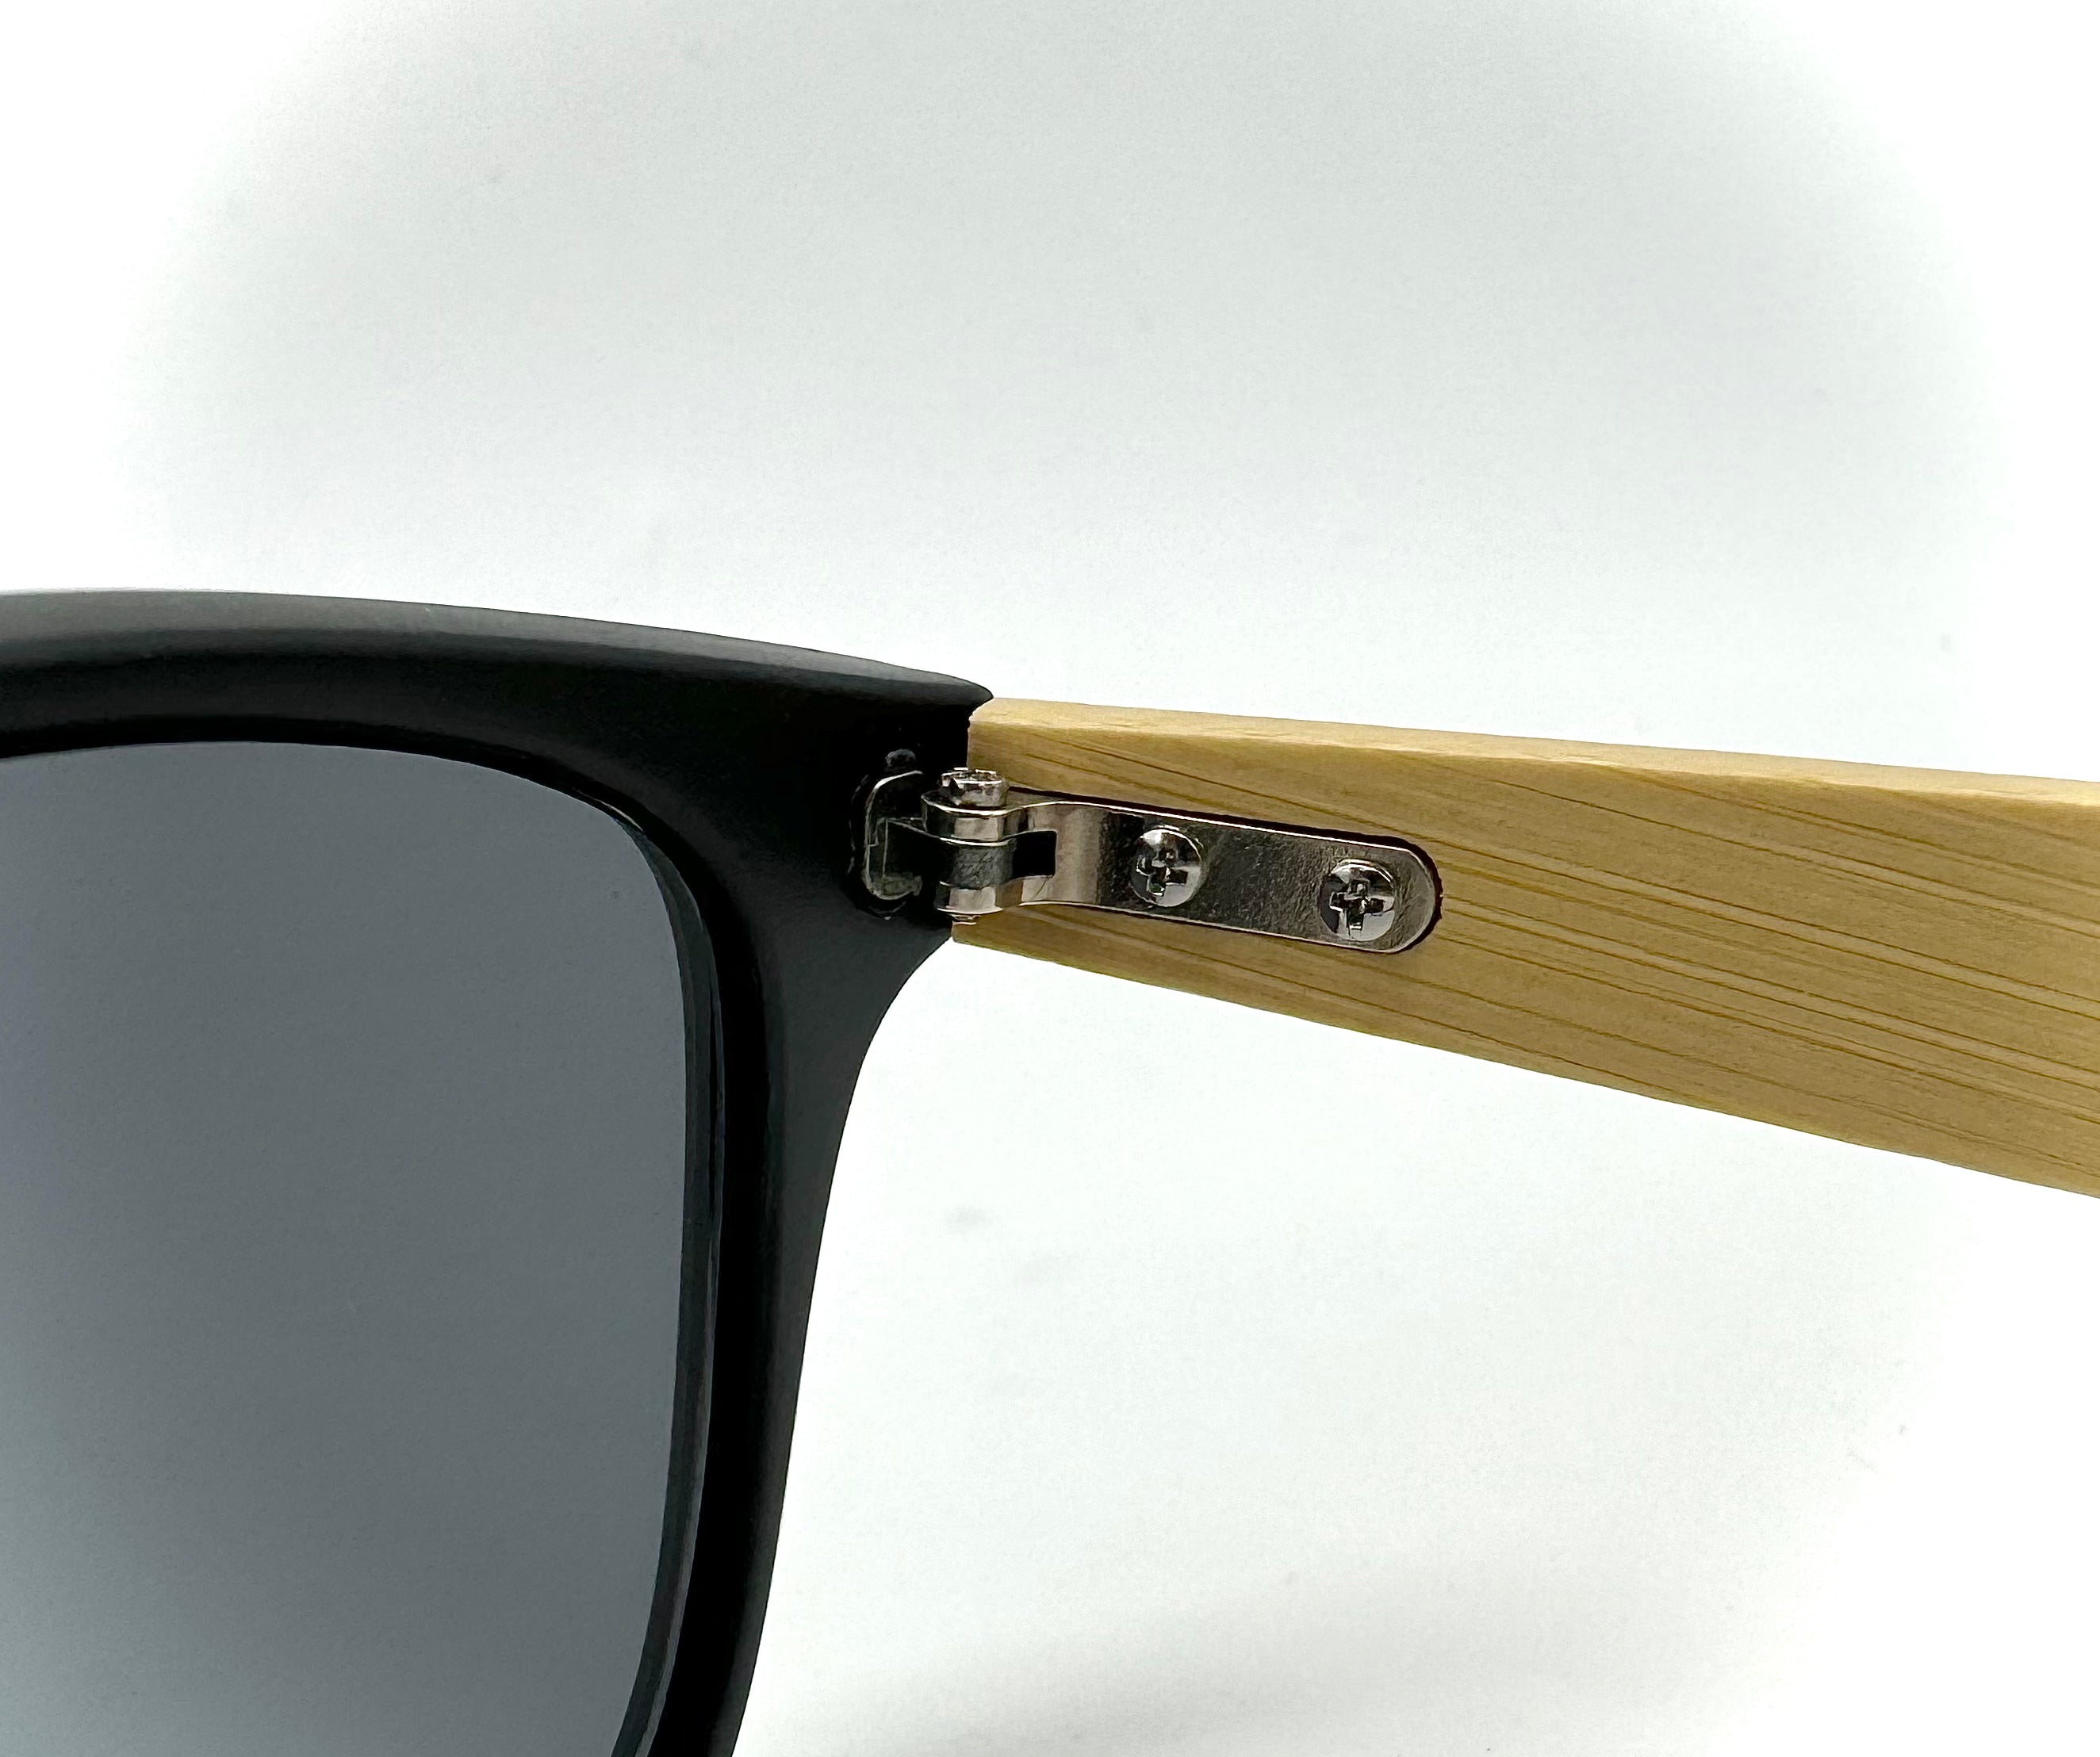 Handmade Wooden Sunglasses - Wayfarer Surf Style